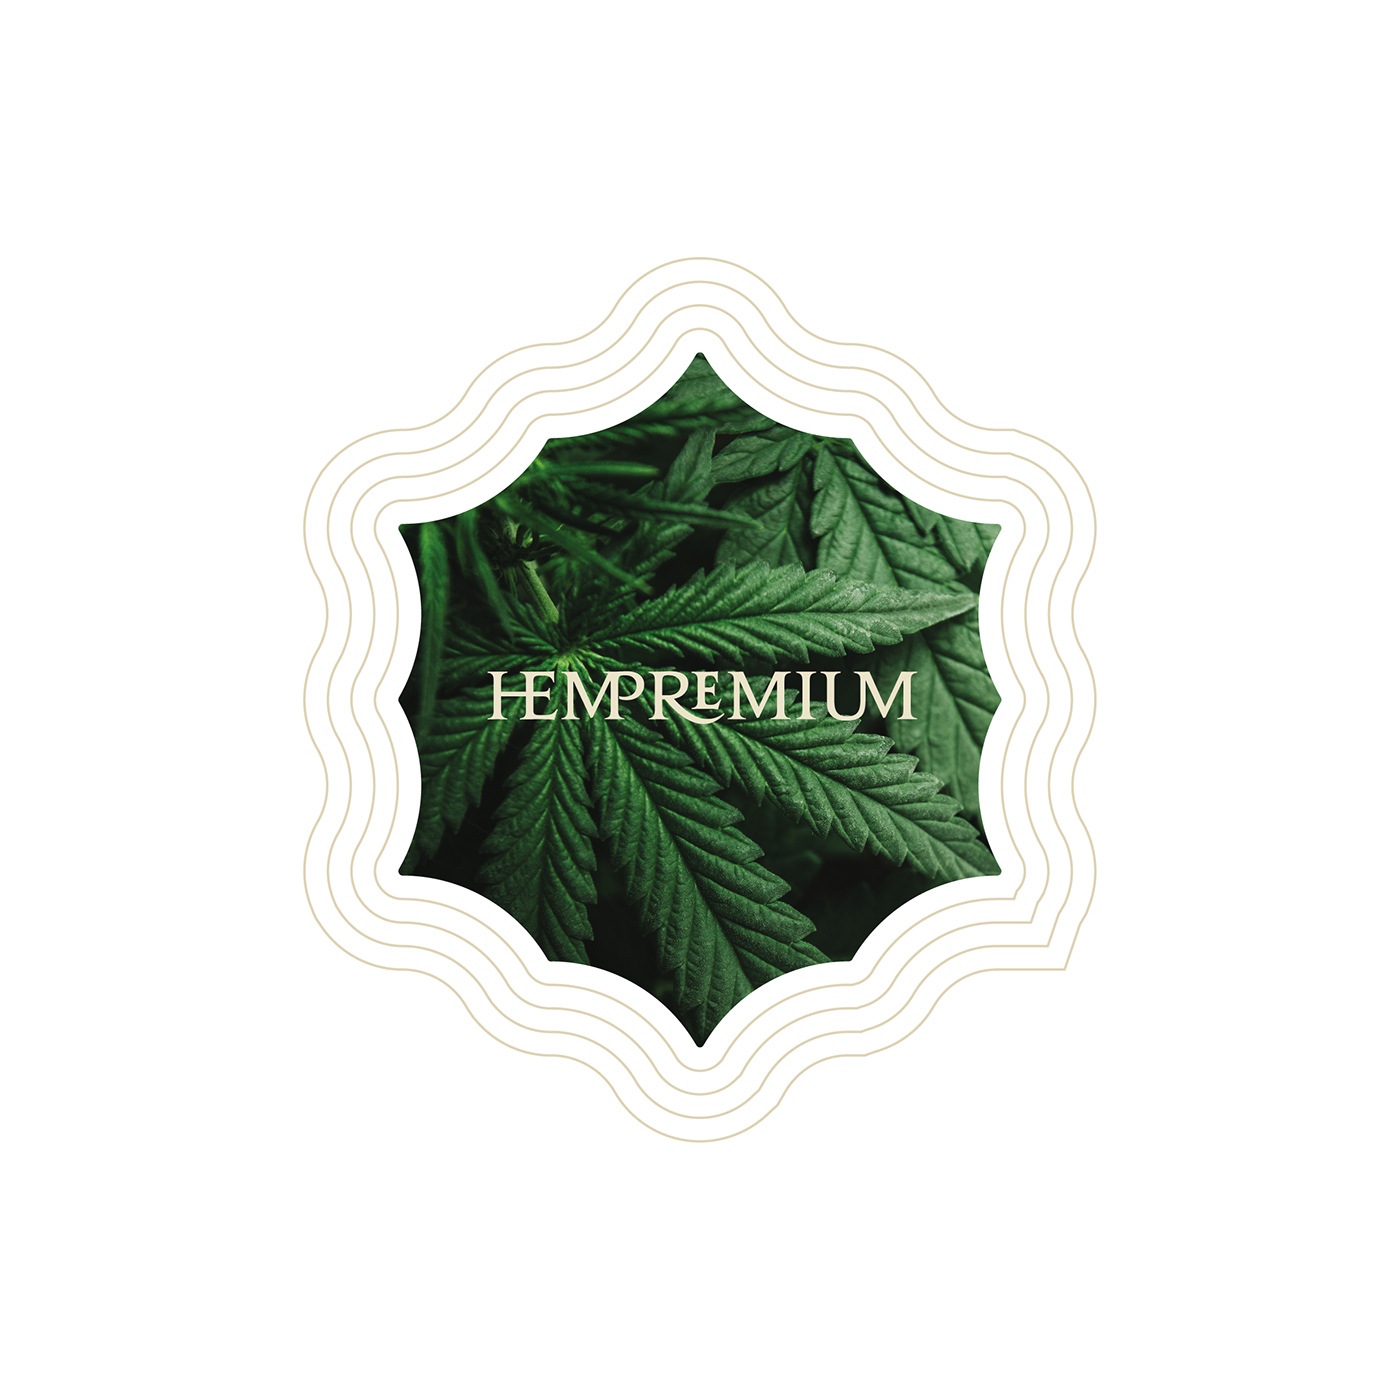 Packaging logo cannabis canapa corporate identity branding 